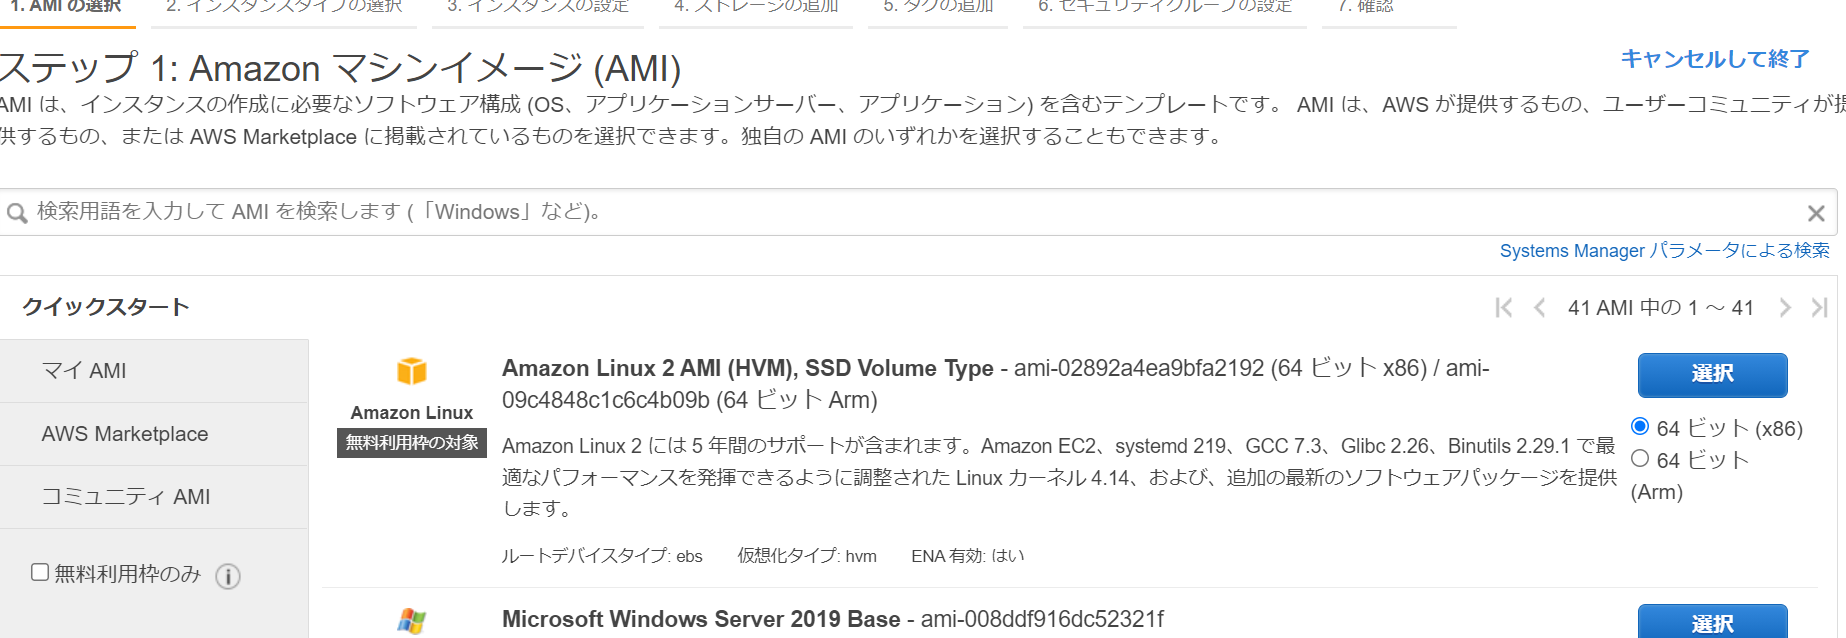 02_Amazonマシンイメージ(AMI)の選択_Amazon_Linux_2_AMI.png